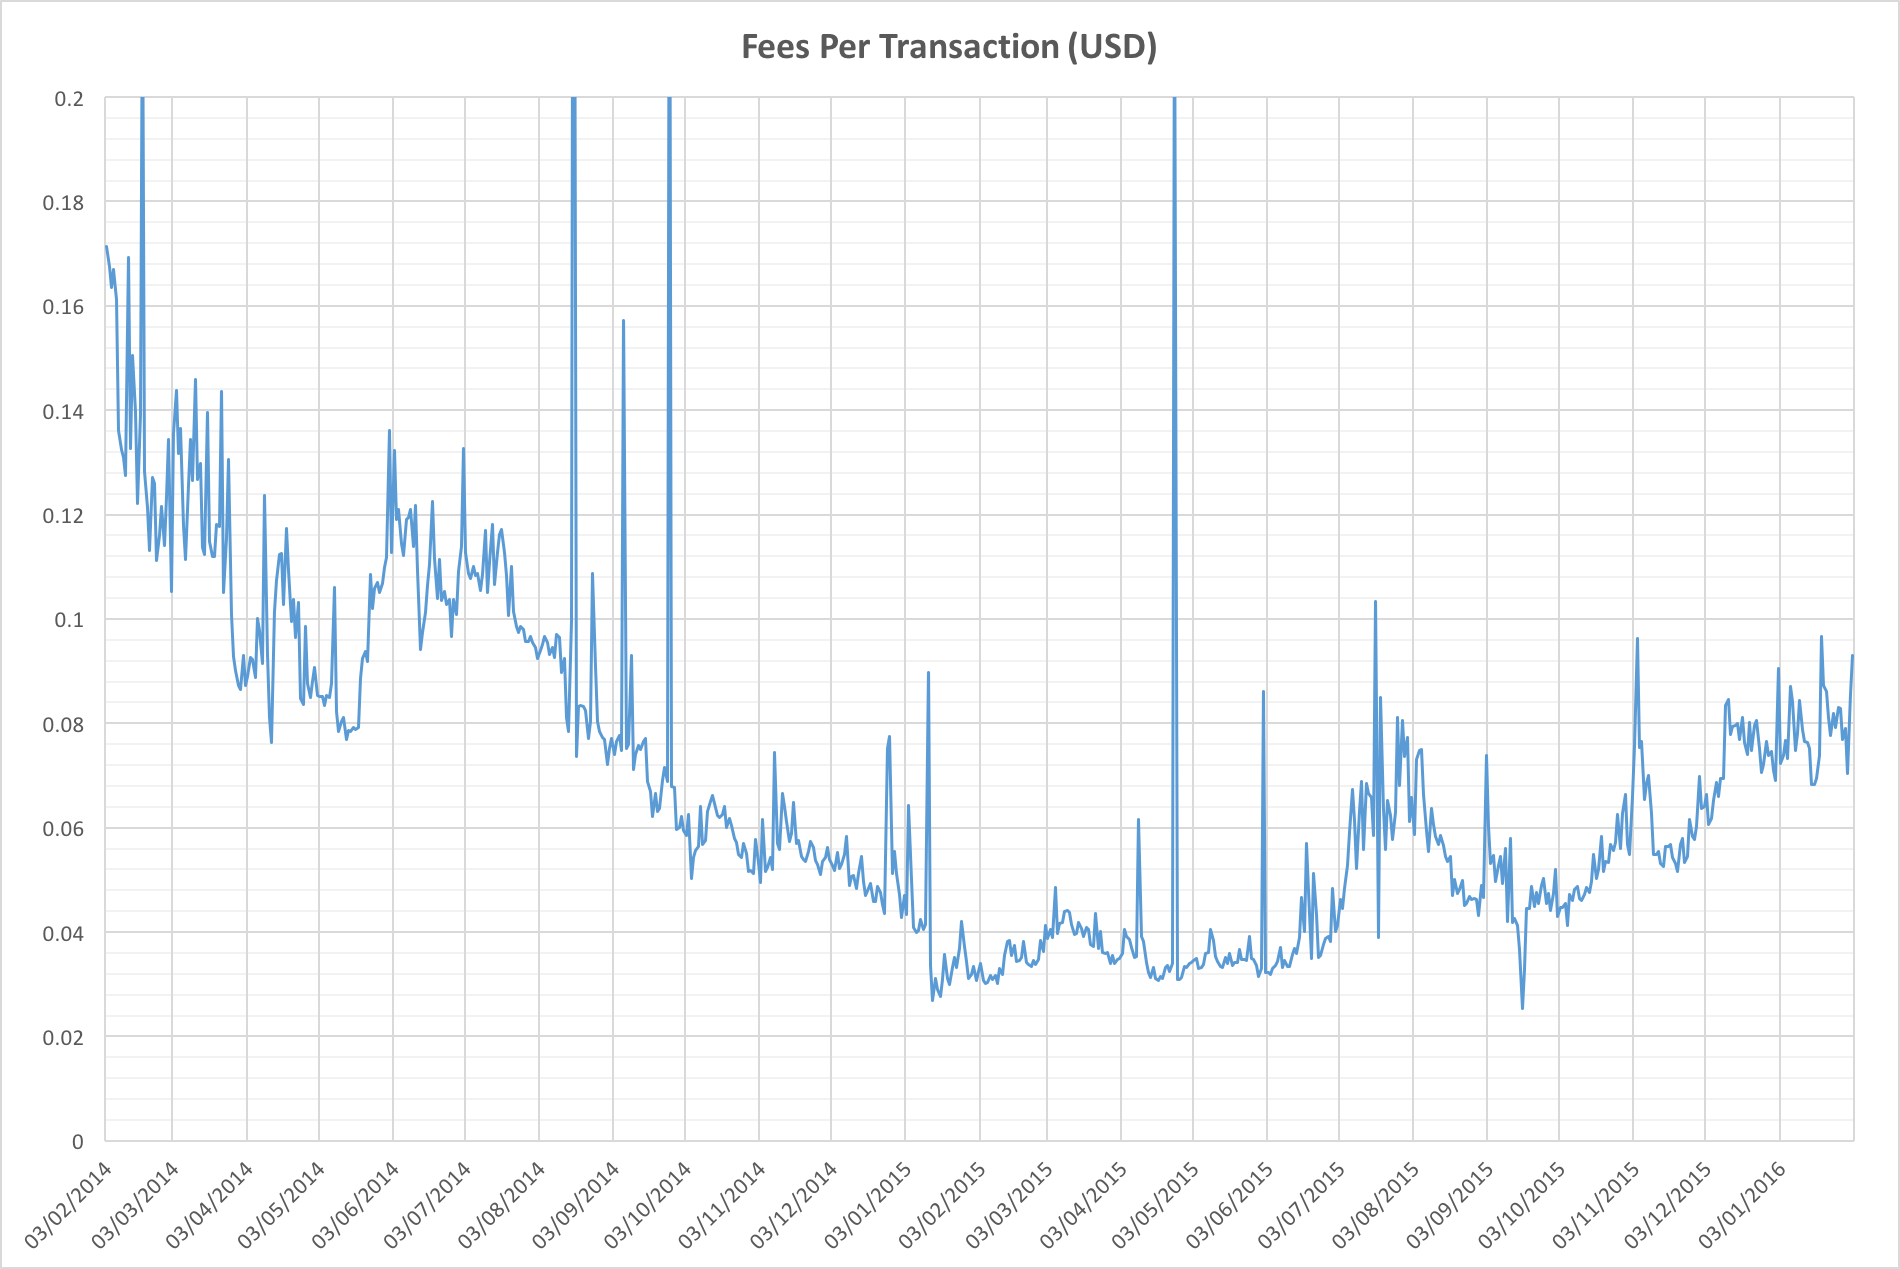 Fees per Bitcoin transaction in USD